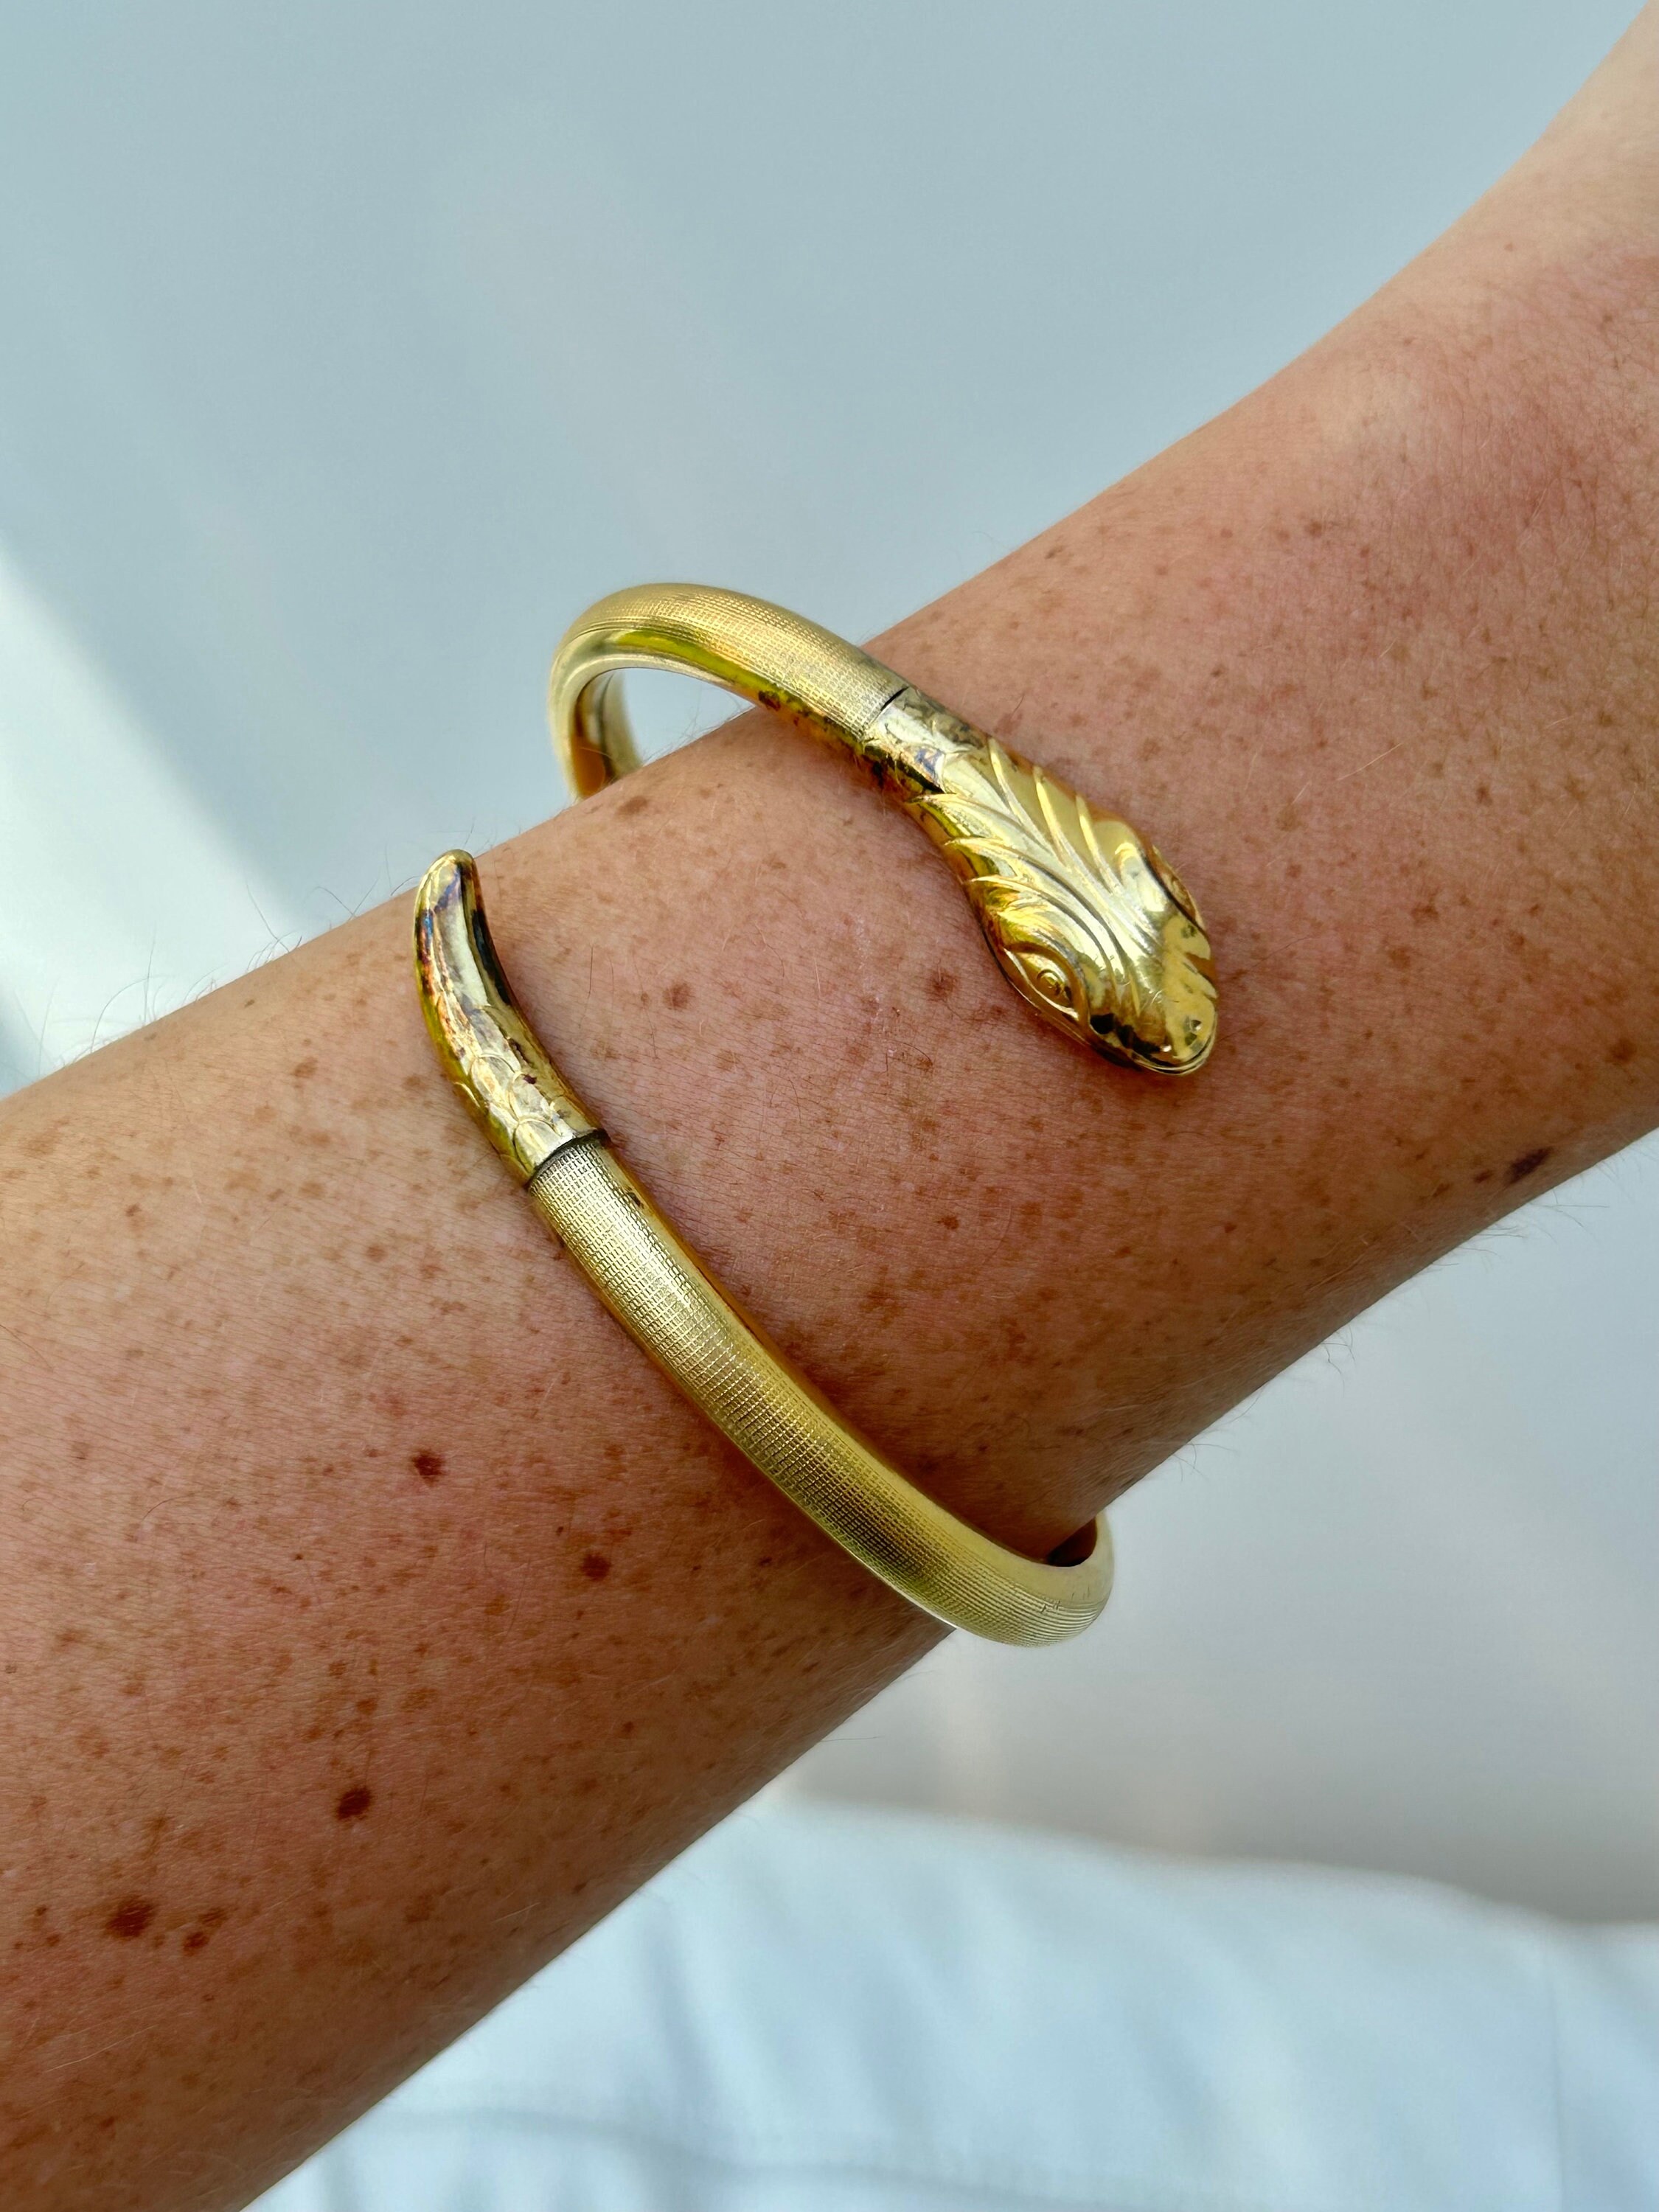 SOLD** Antique snake bracelet – Sperlich Jewelry